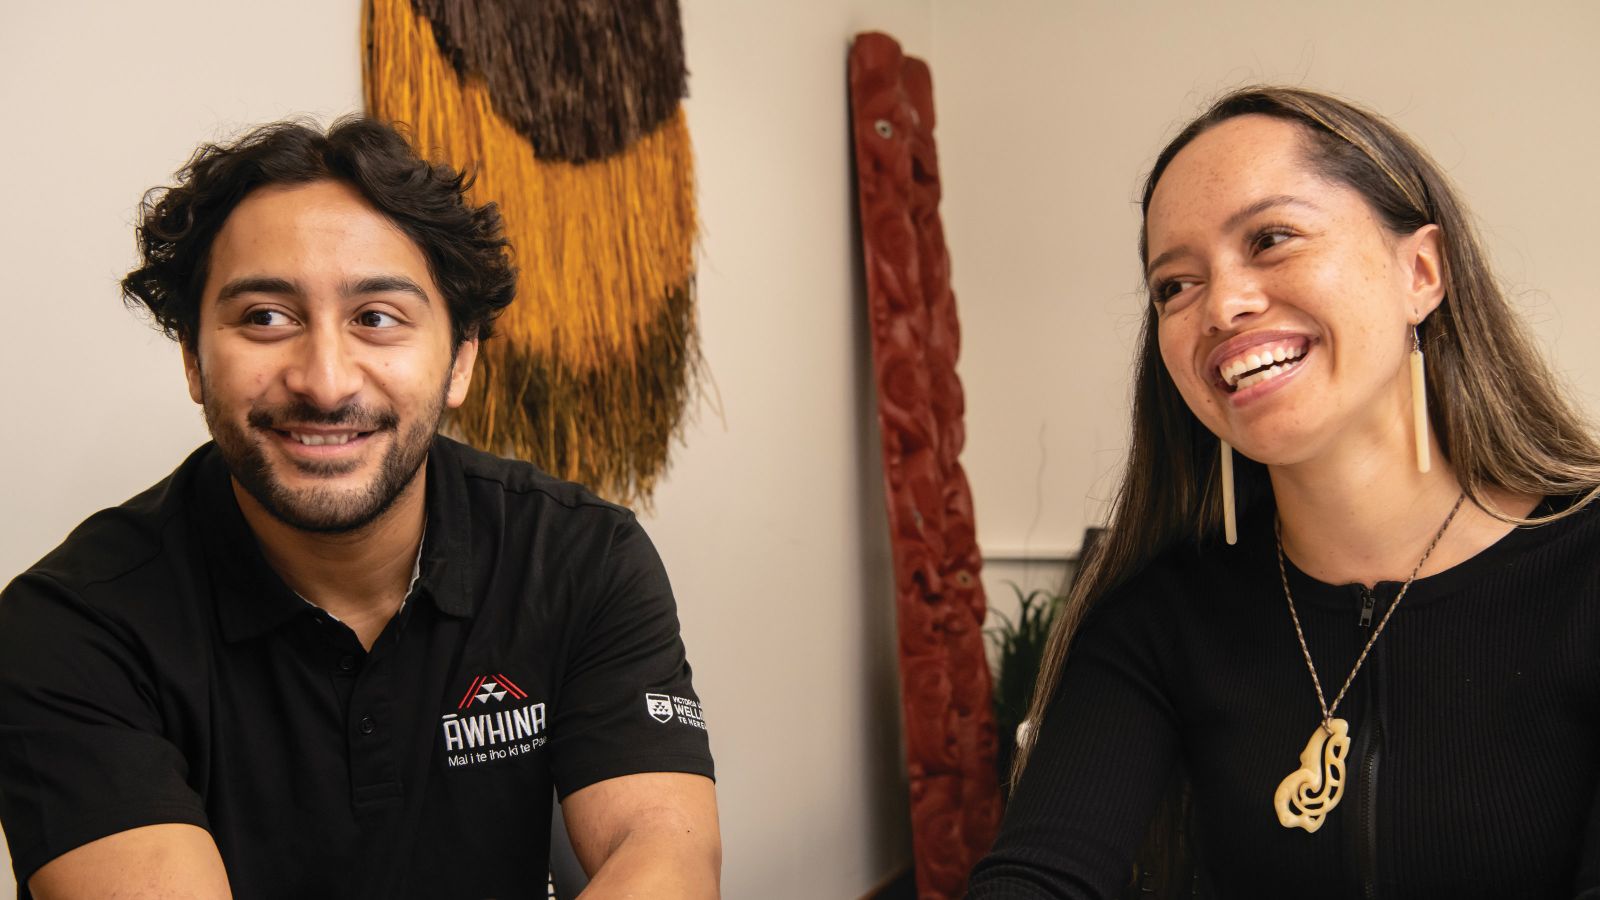 A young Māori man wearing a black shirt with an Awhina logo and a young Māori woman, both laughing. 